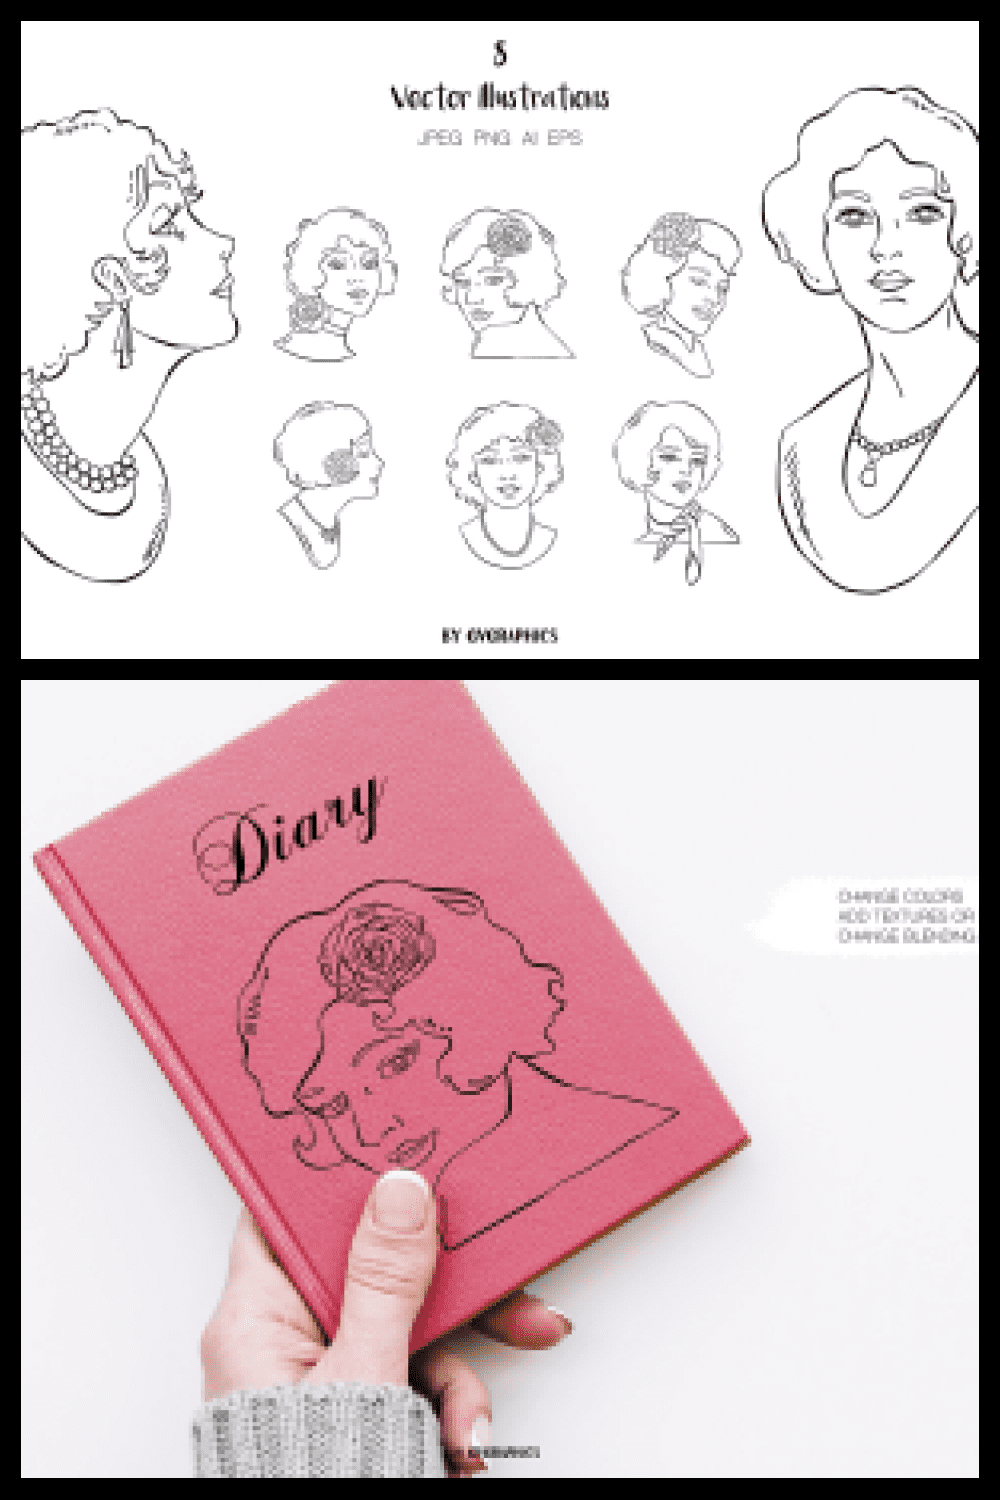 Hand Drawn Retro Women Vector Illustrations - MasterBundles - Pinterest Collage Image.